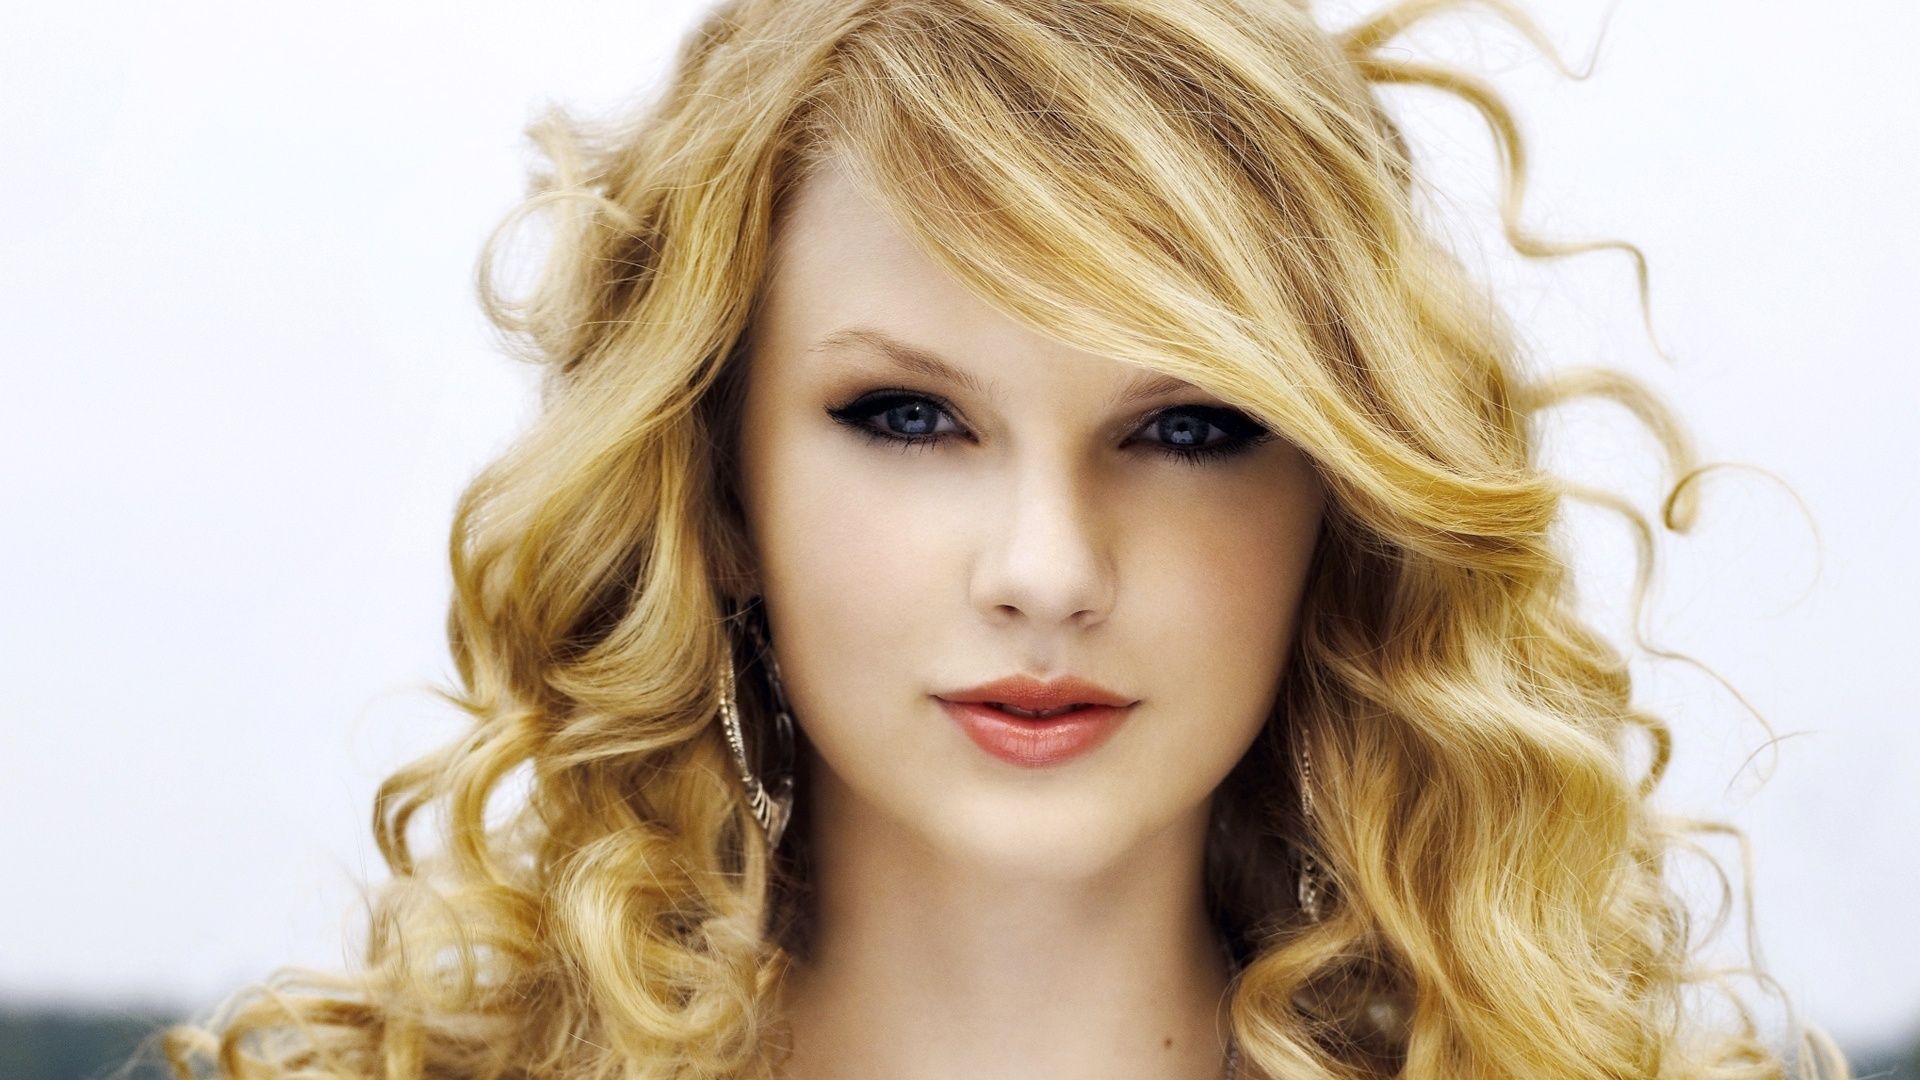 16 Taylor Swift HD Wallpaper 1567 :: Taylor Swift Wallpapers